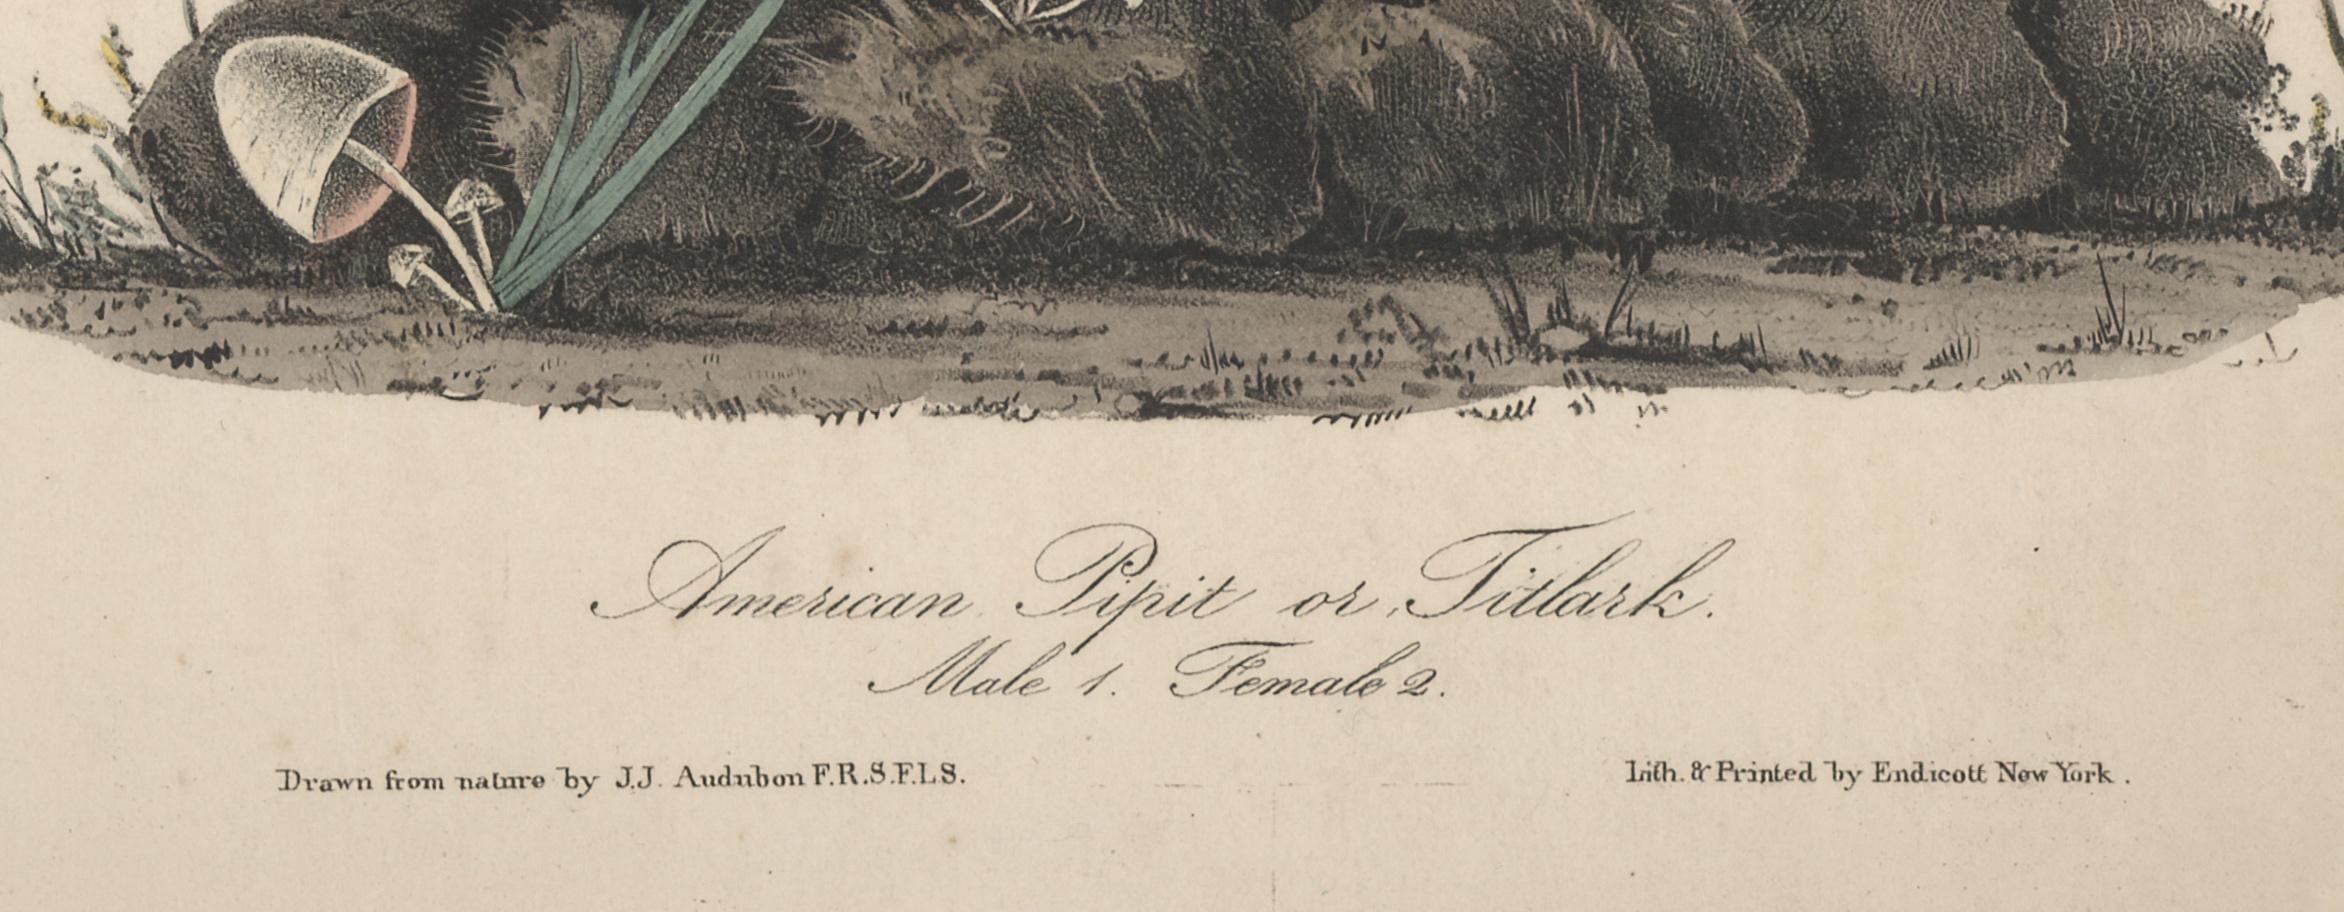 American Pipit or Titlack - White Animal Print by John James Audubon